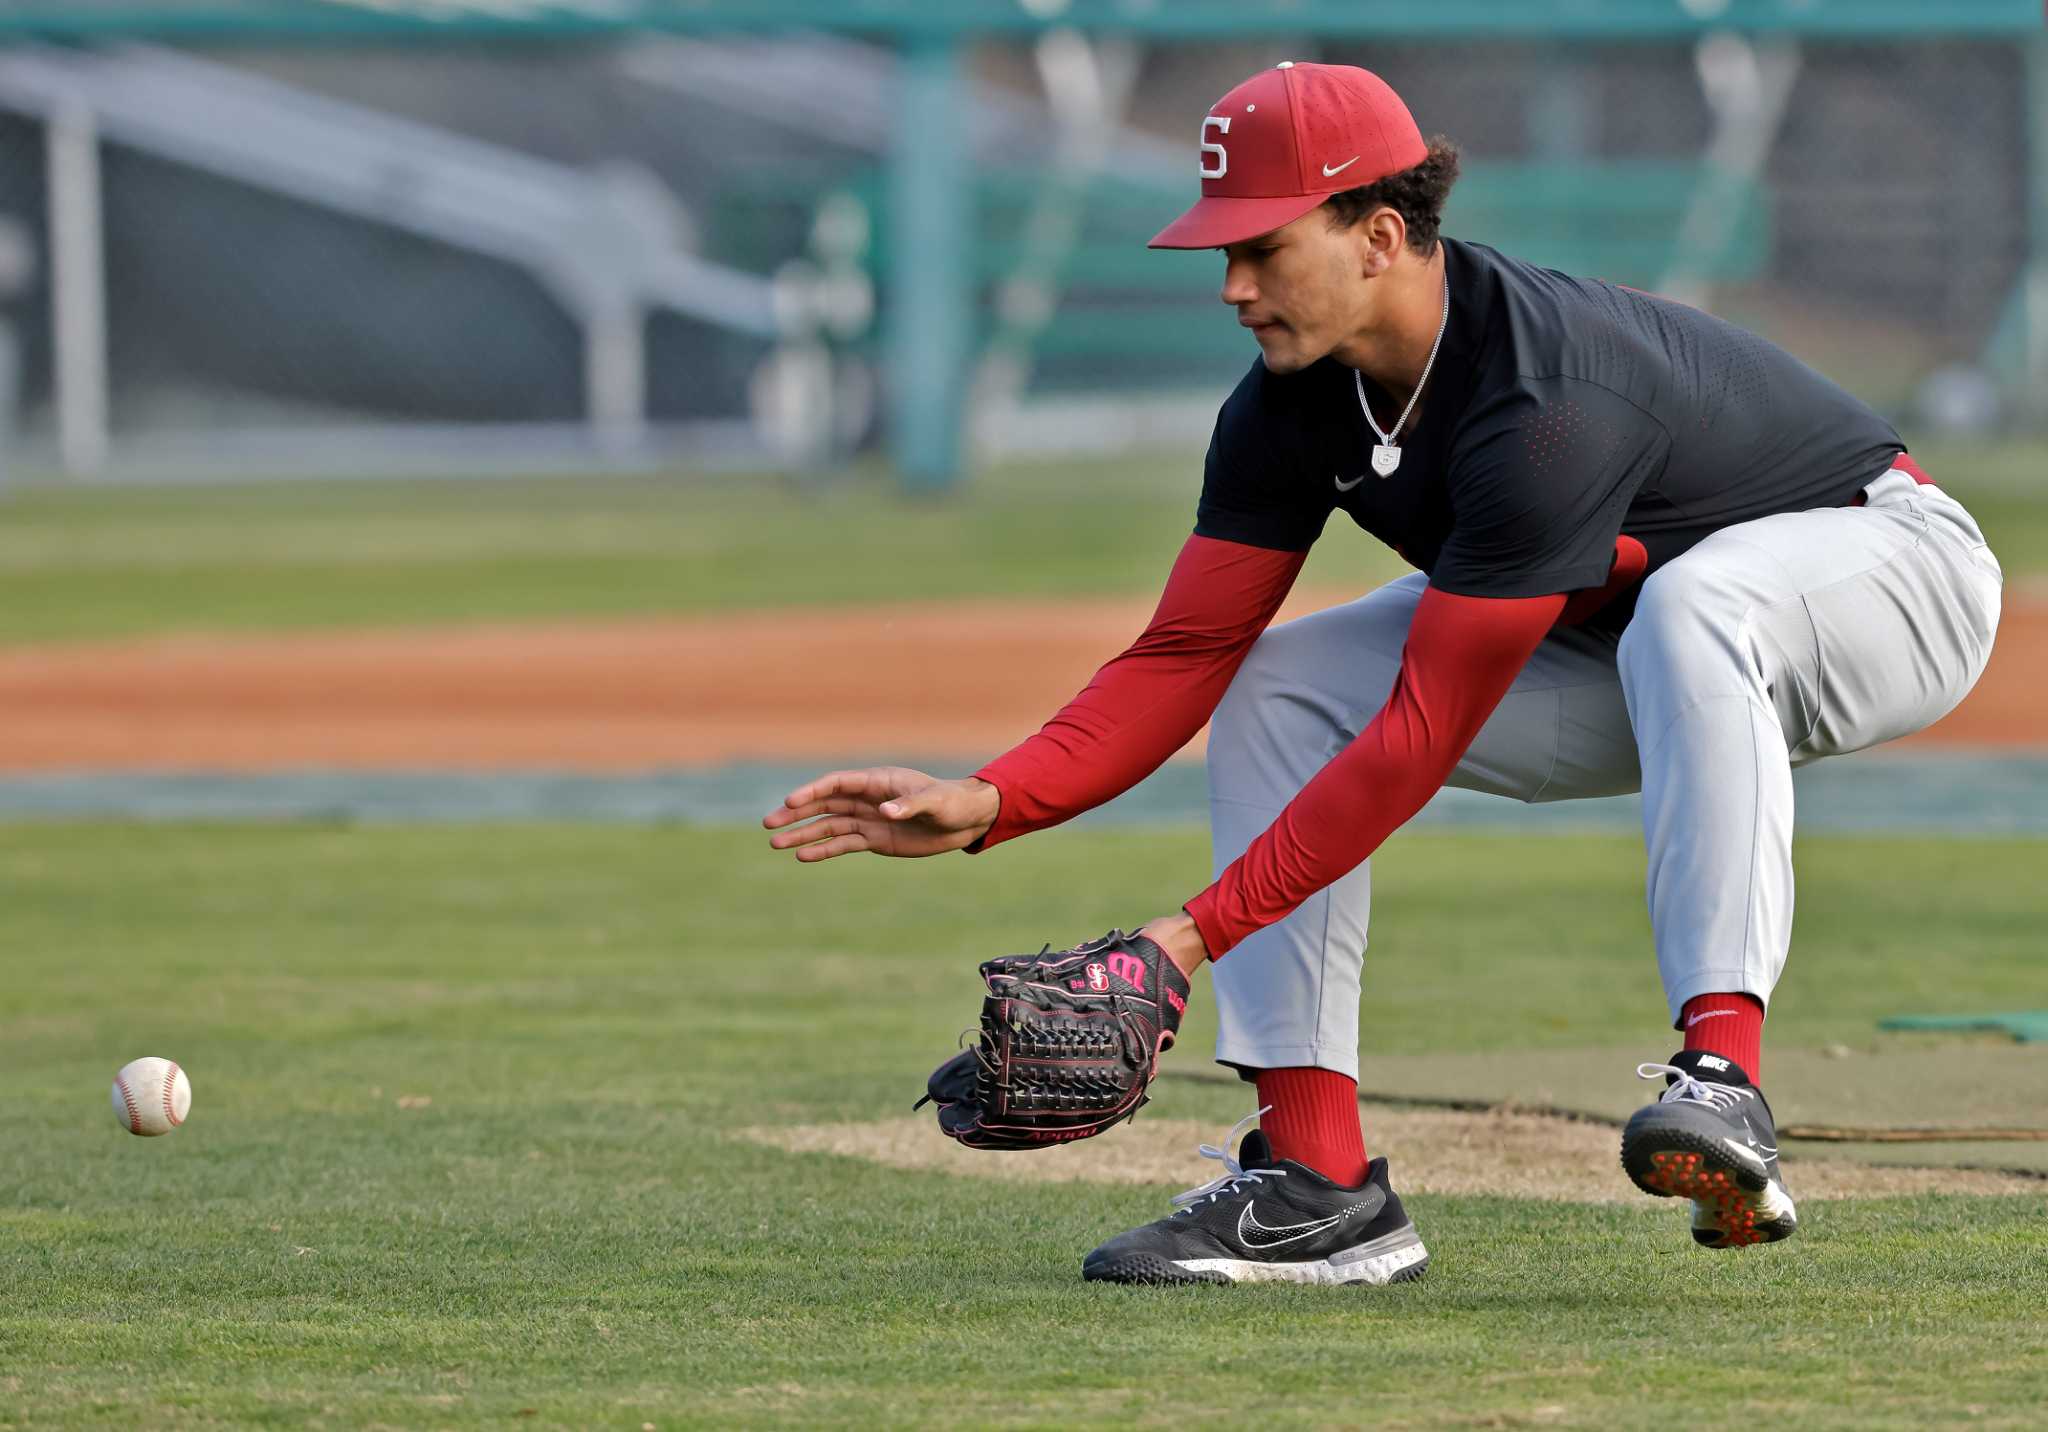 Defense turns season around for Stanford baseball